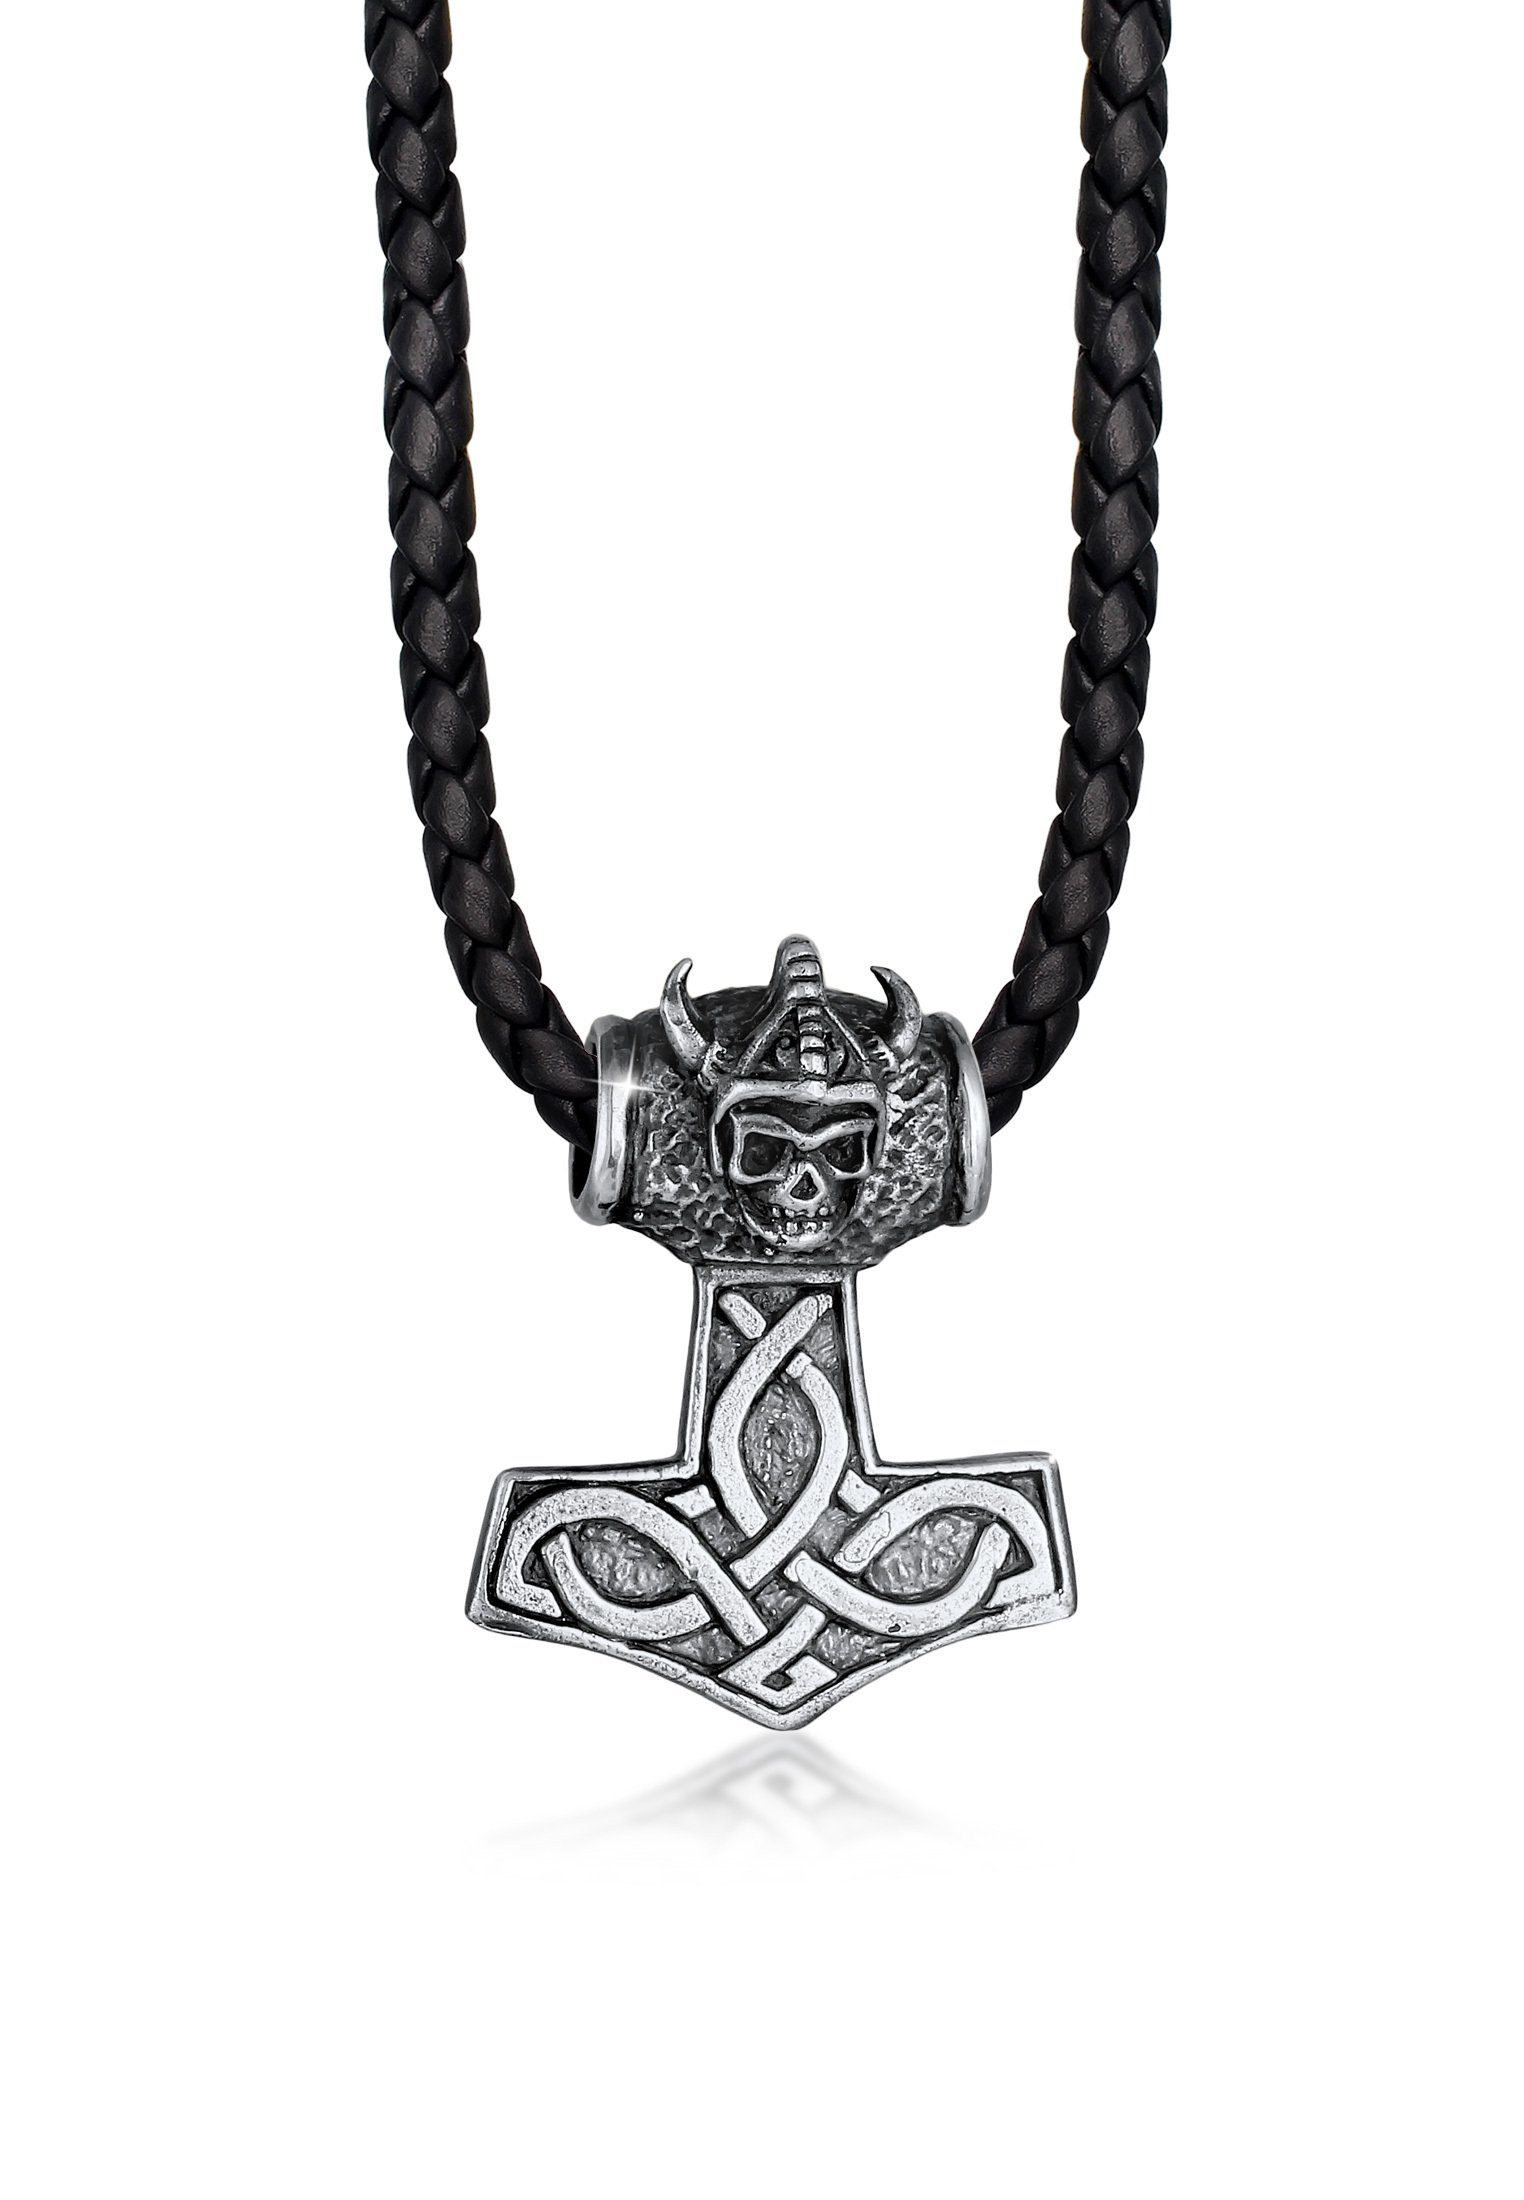 Kuzzoi Kette mit Anhänger Lederkette Hammer Keltischer Knoten 925 Silber, Hammer